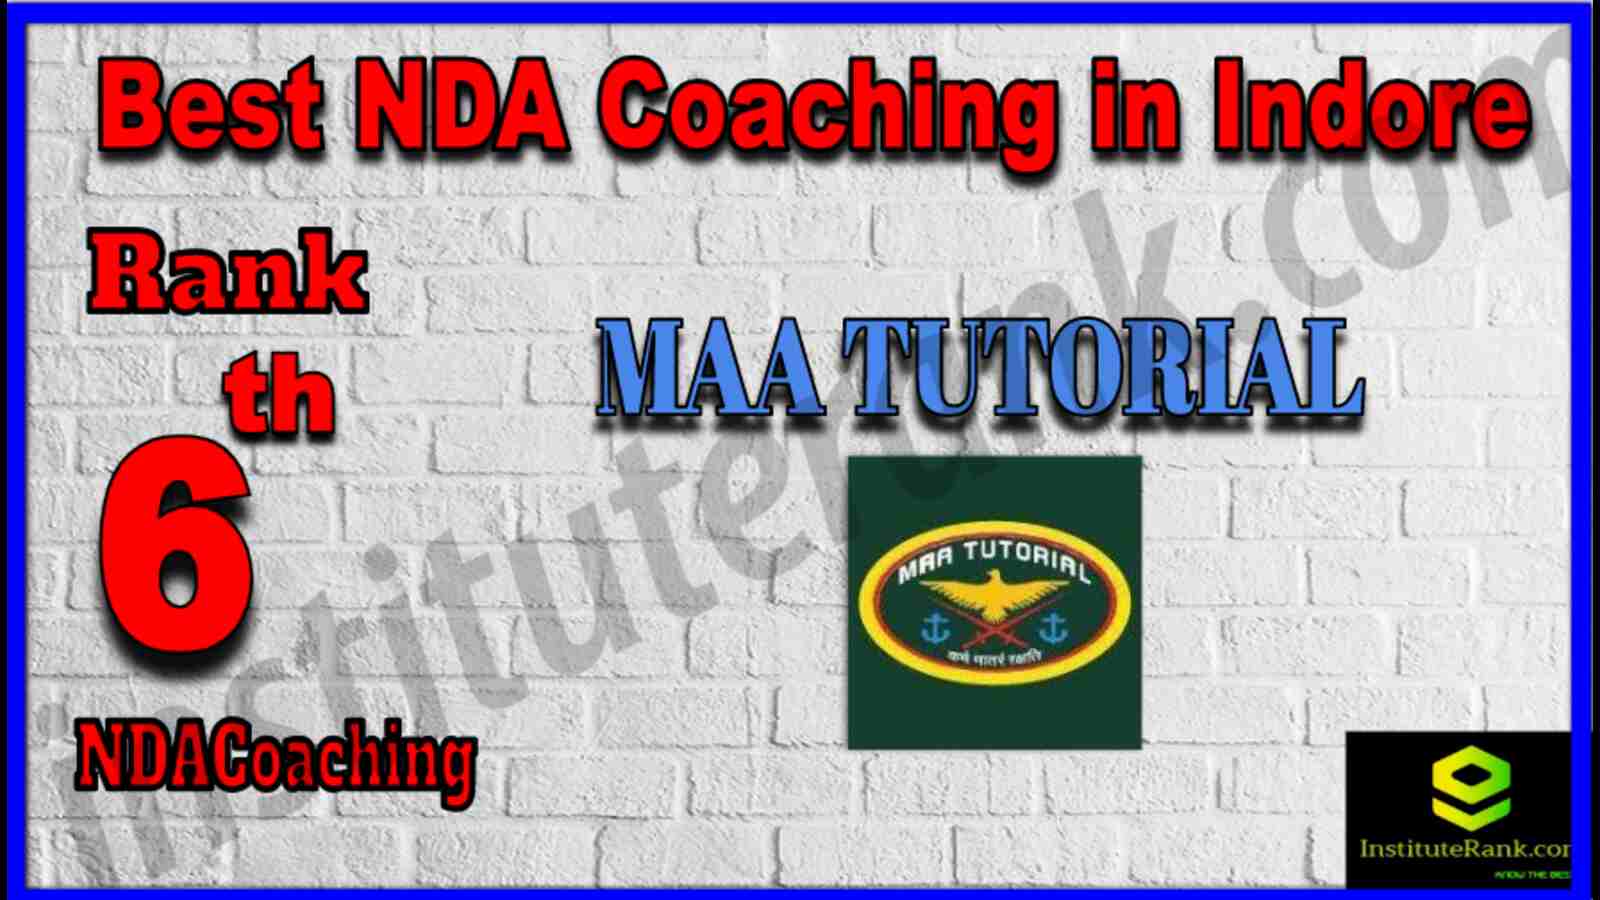 Rank 6 Best NDA Coaching in Indore